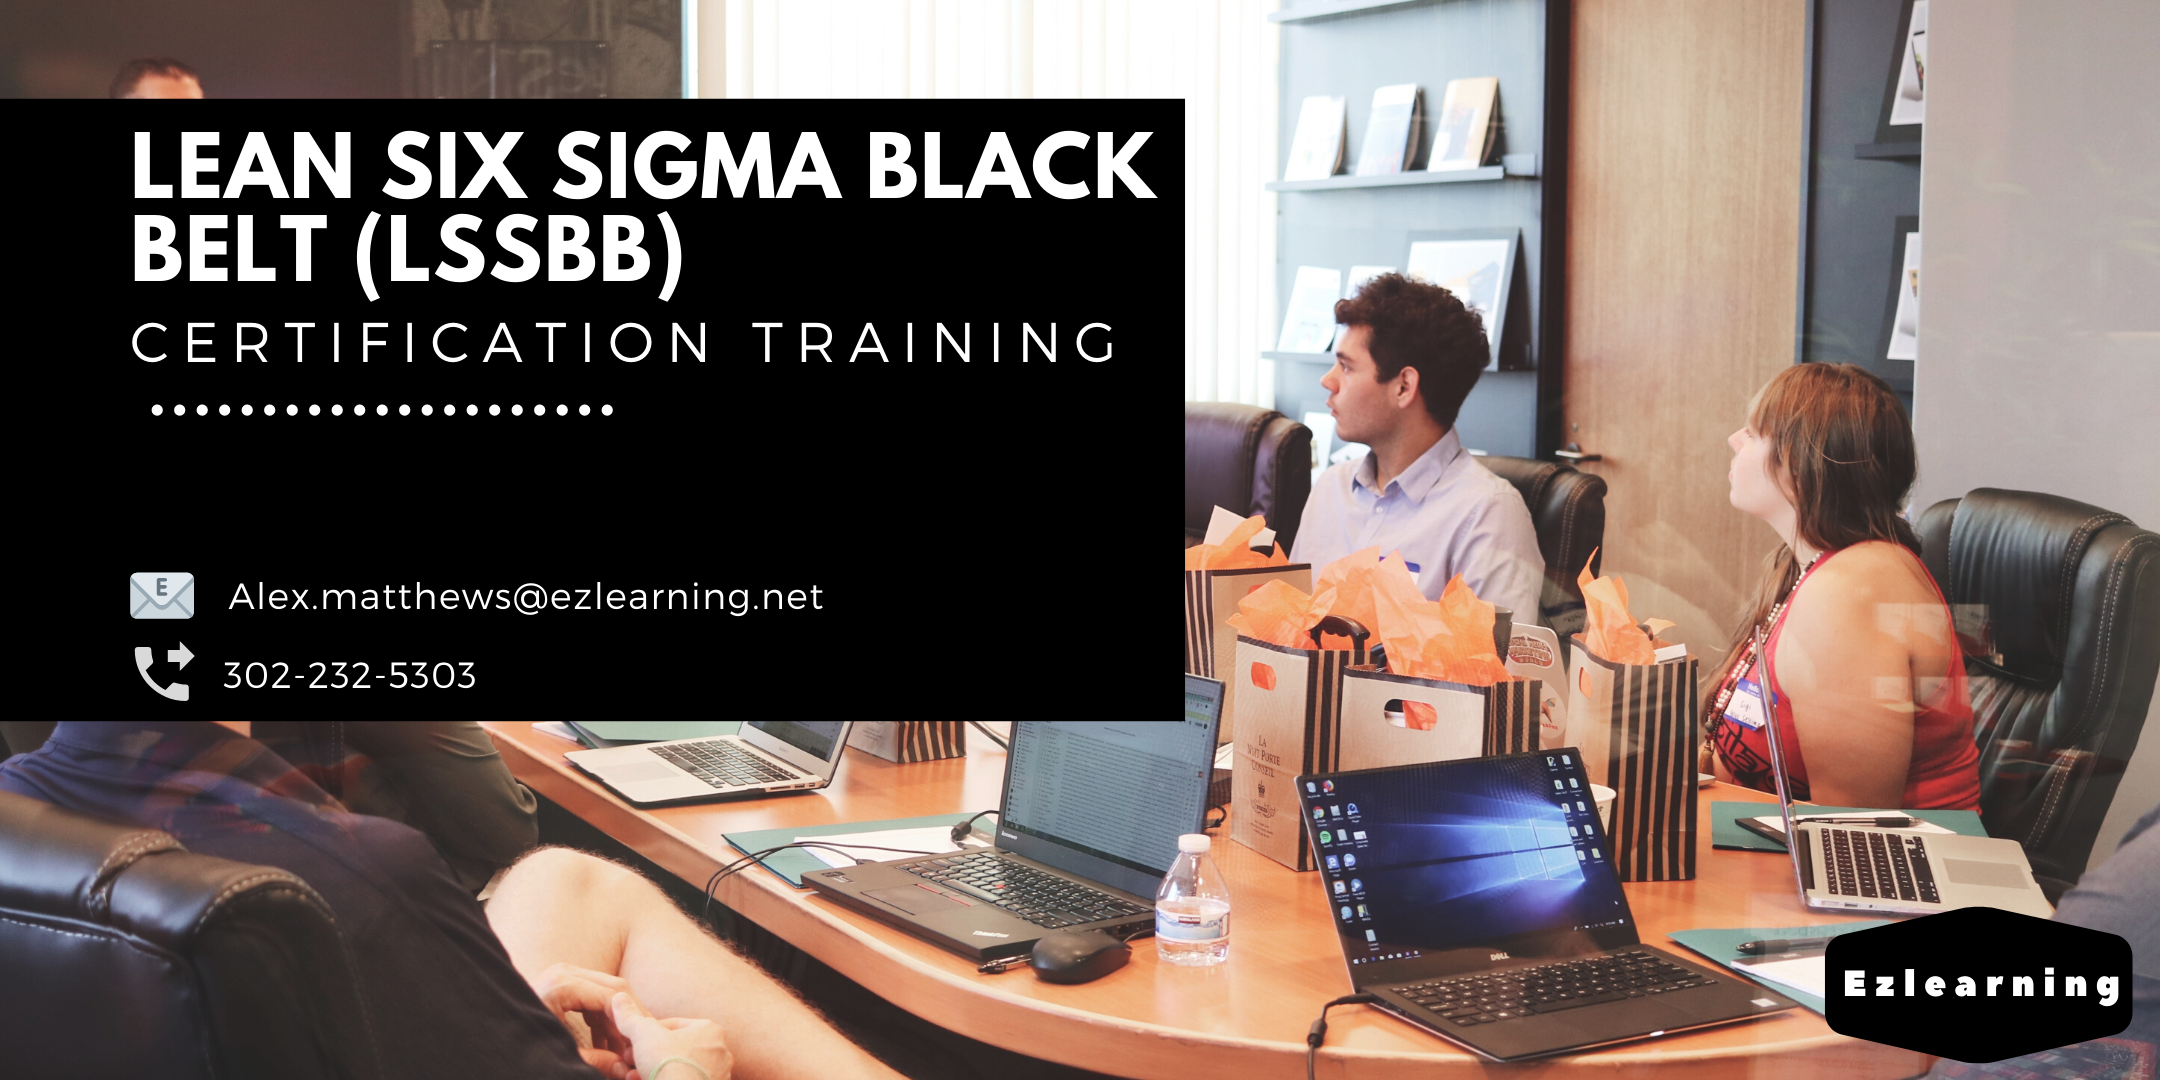 Lean Six Sigma Black Belt Certification Training in Evansville, IN